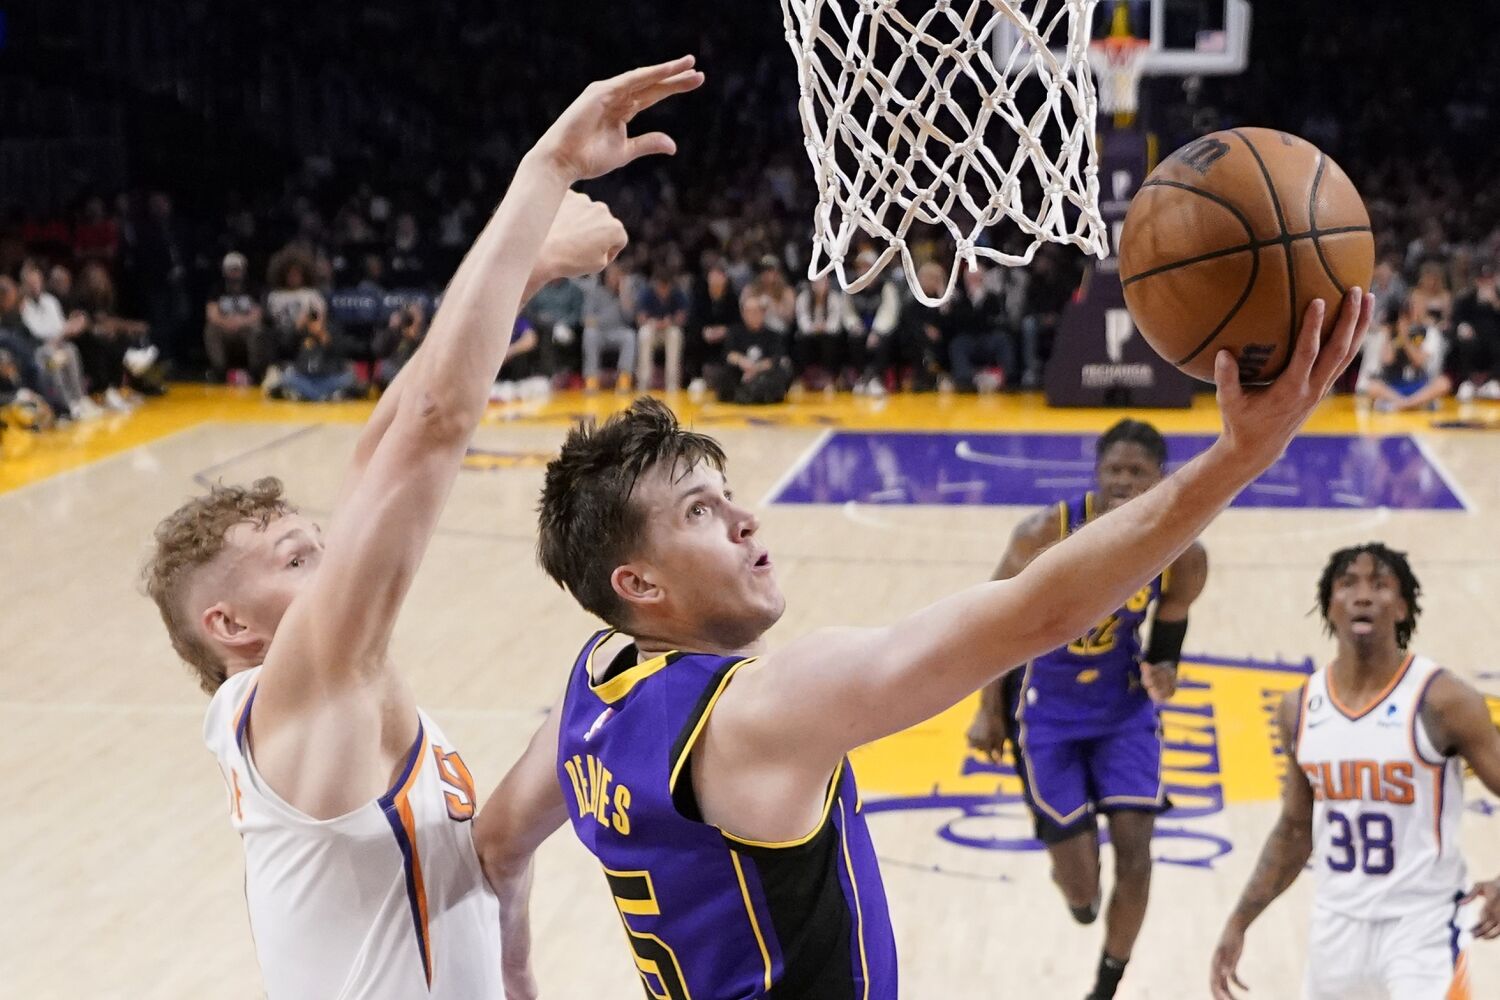 Lakers beat Suns despite LeBron James struggling to score